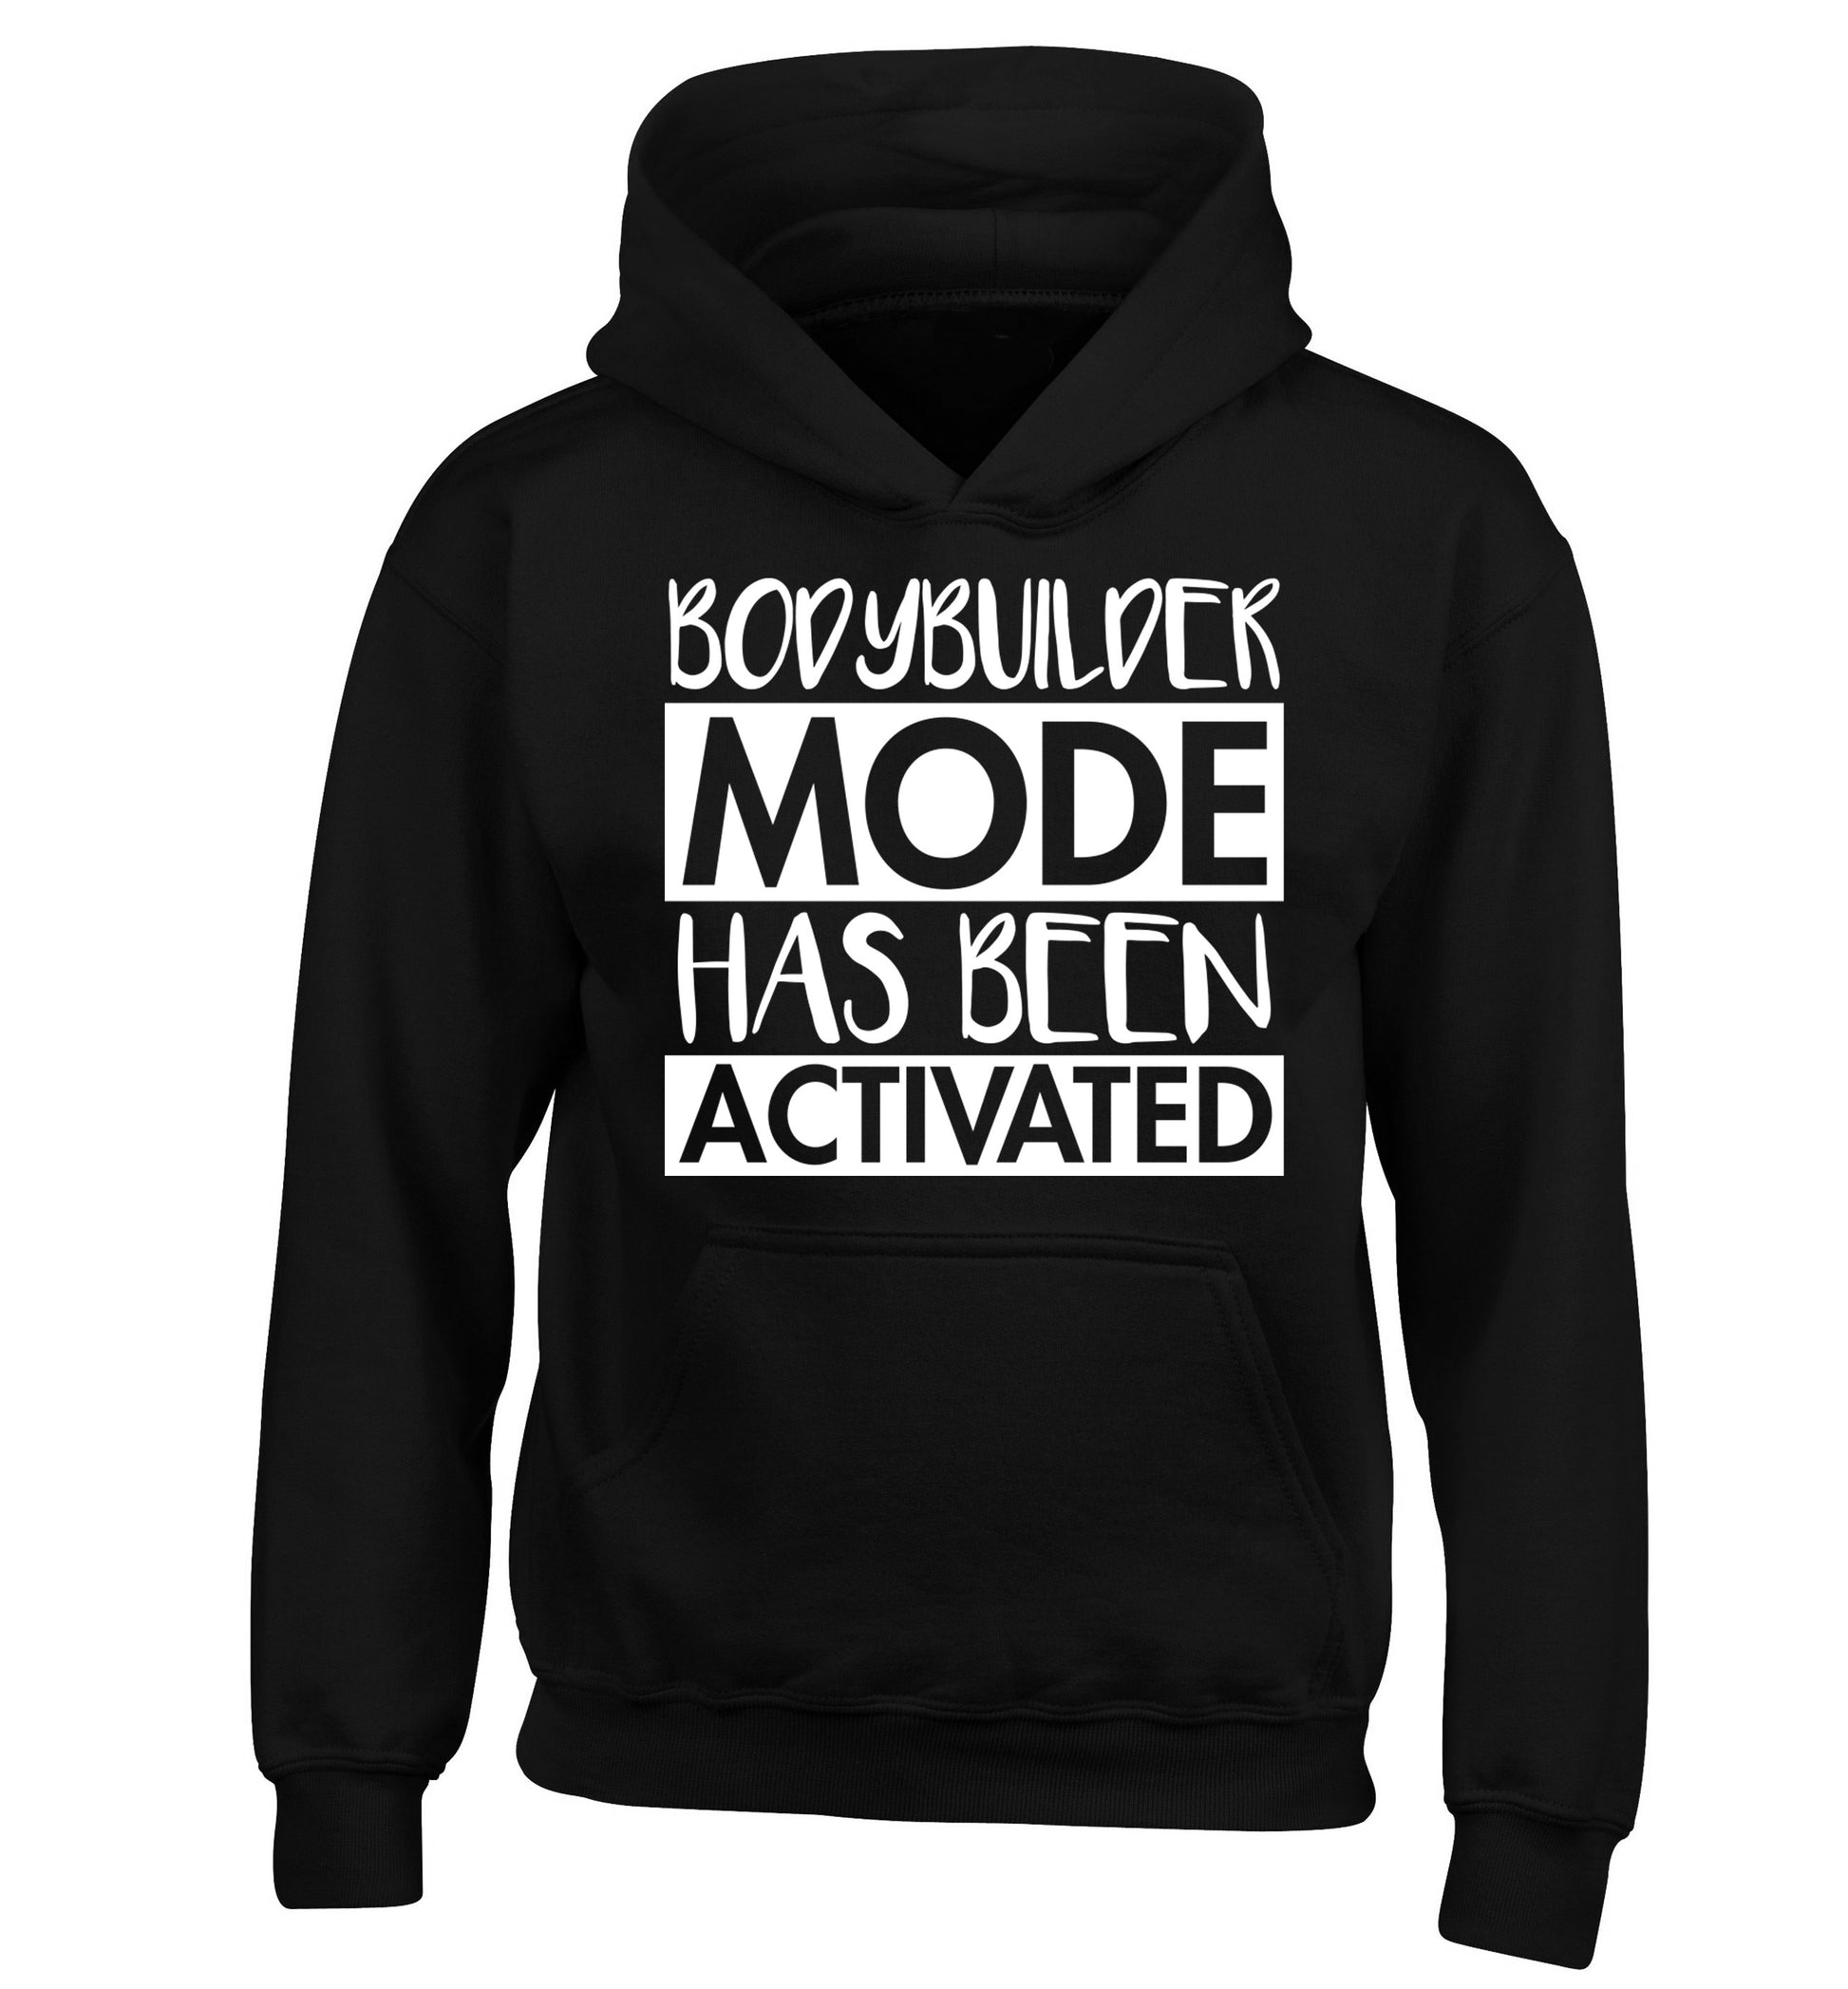 Bodybuilder mode activated children's black hoodie 12-14 Years